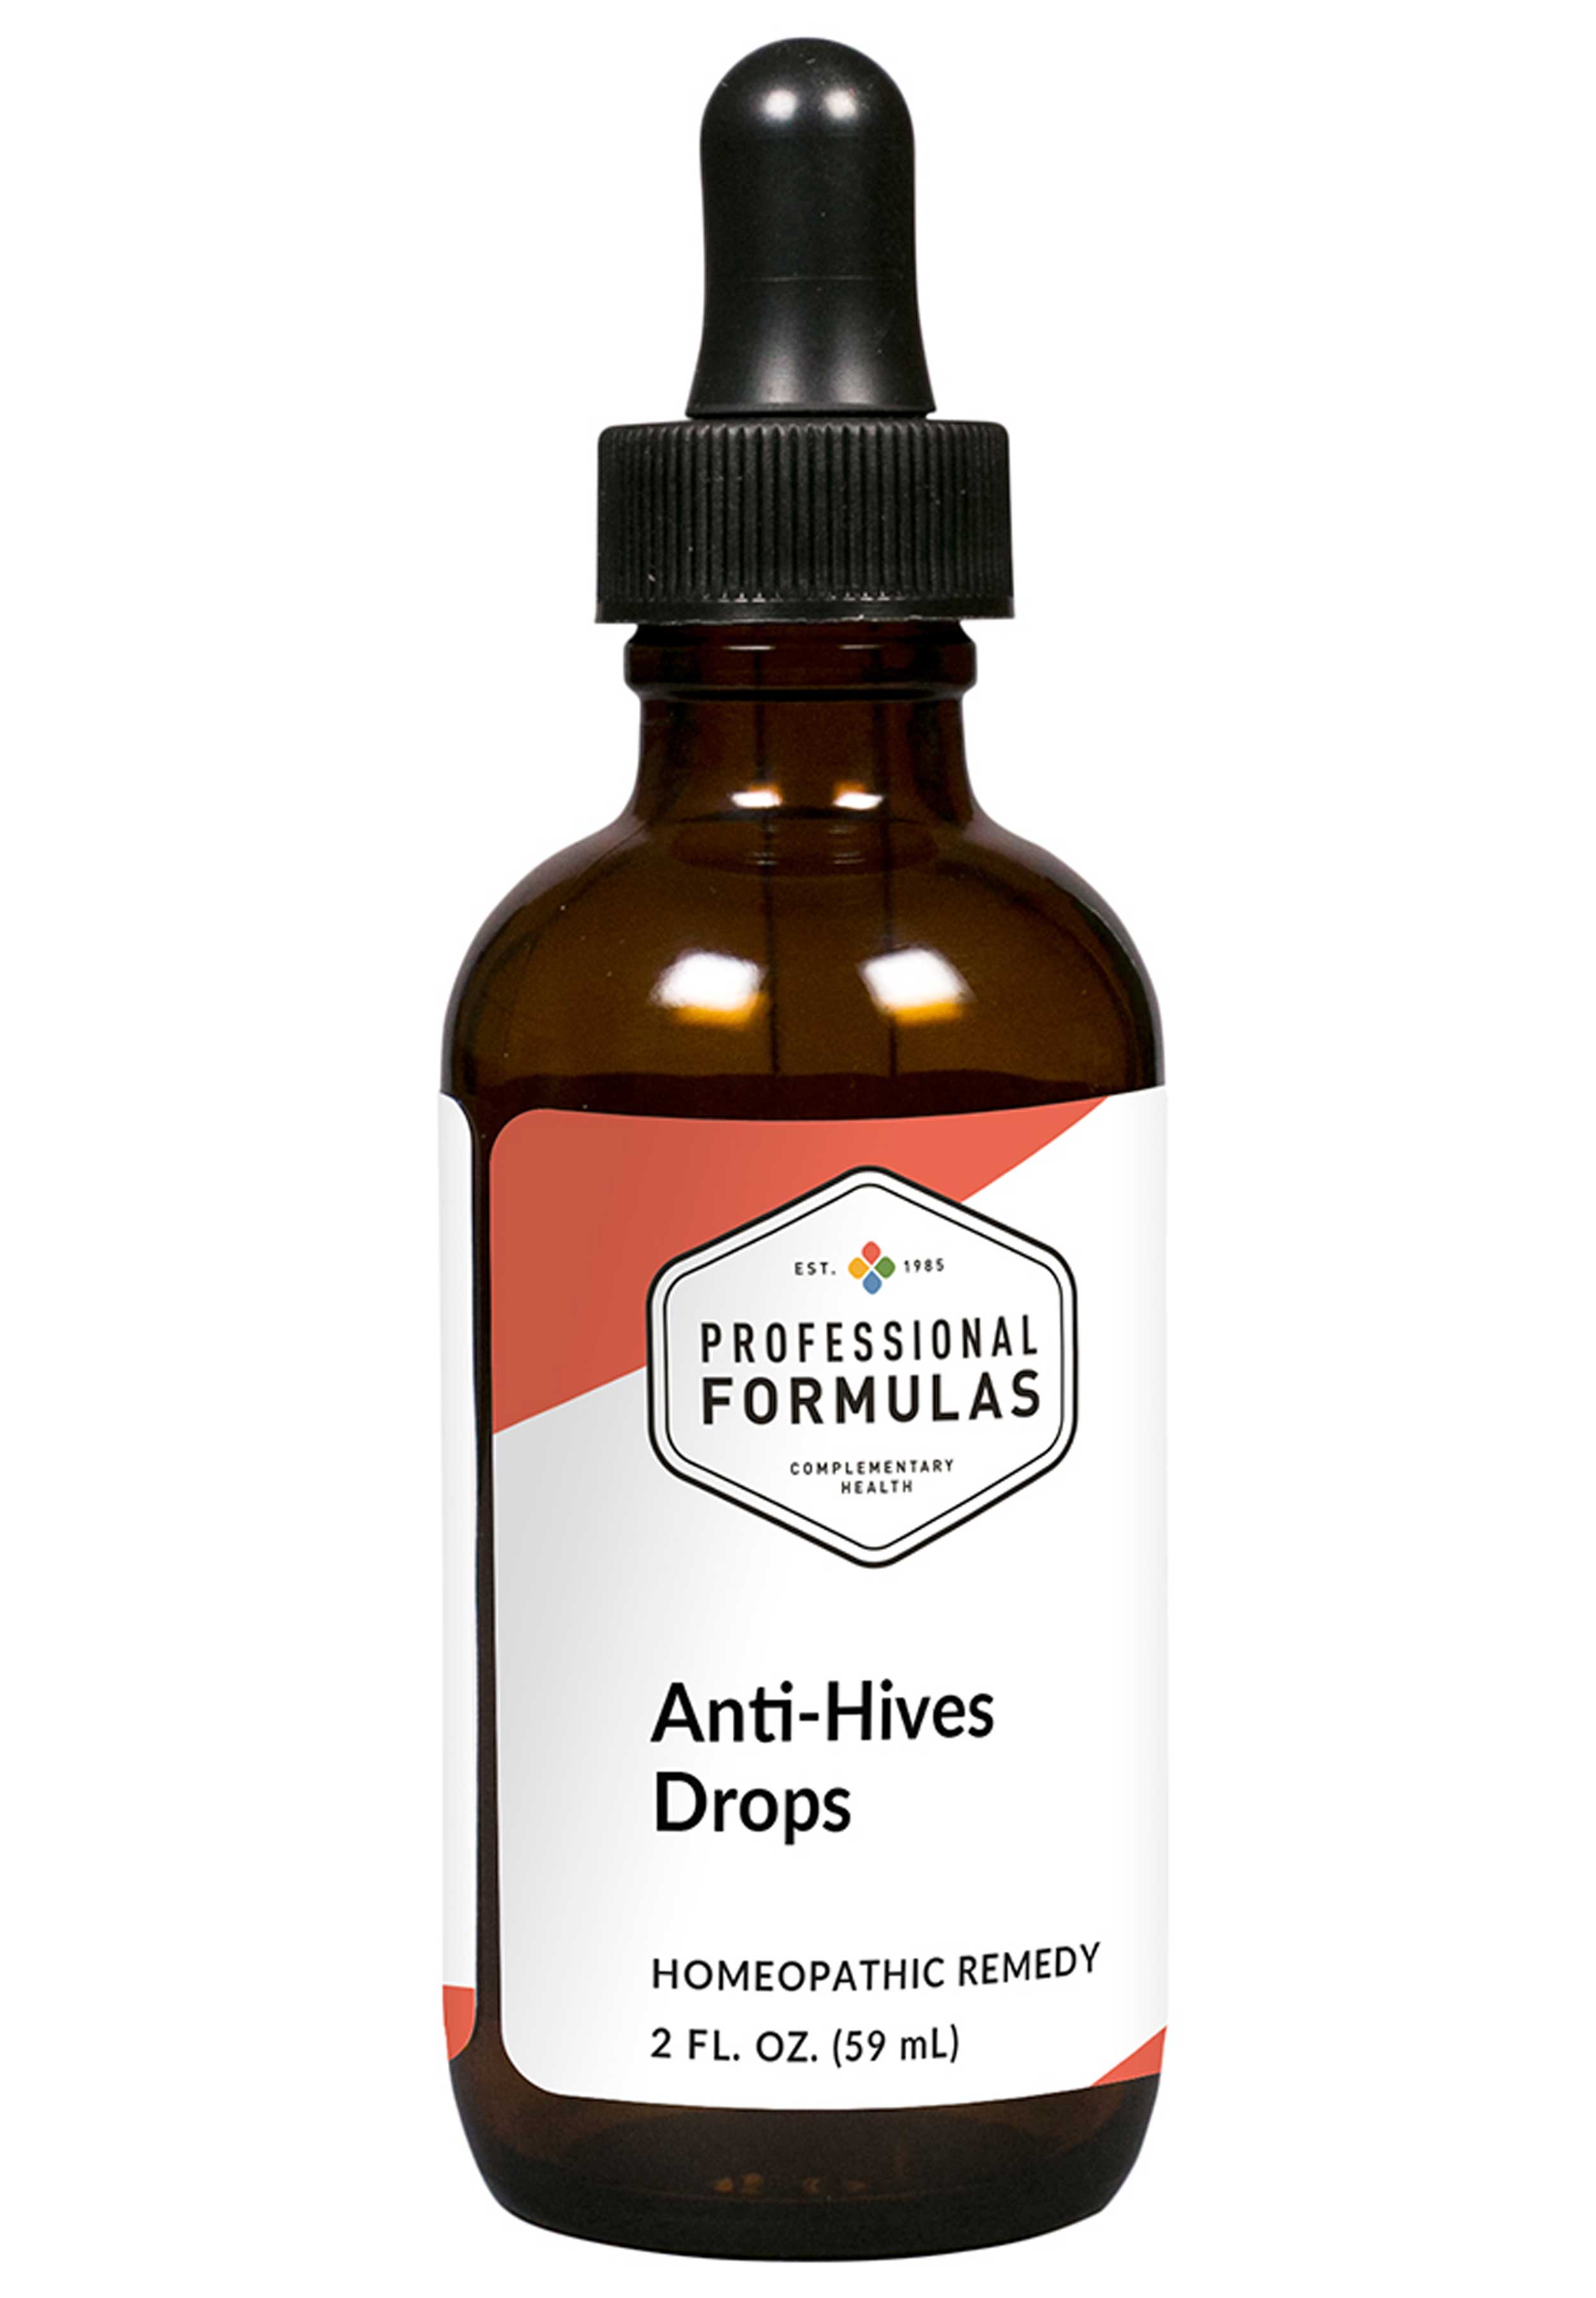 Professional Formulas Anti-Hives Drops